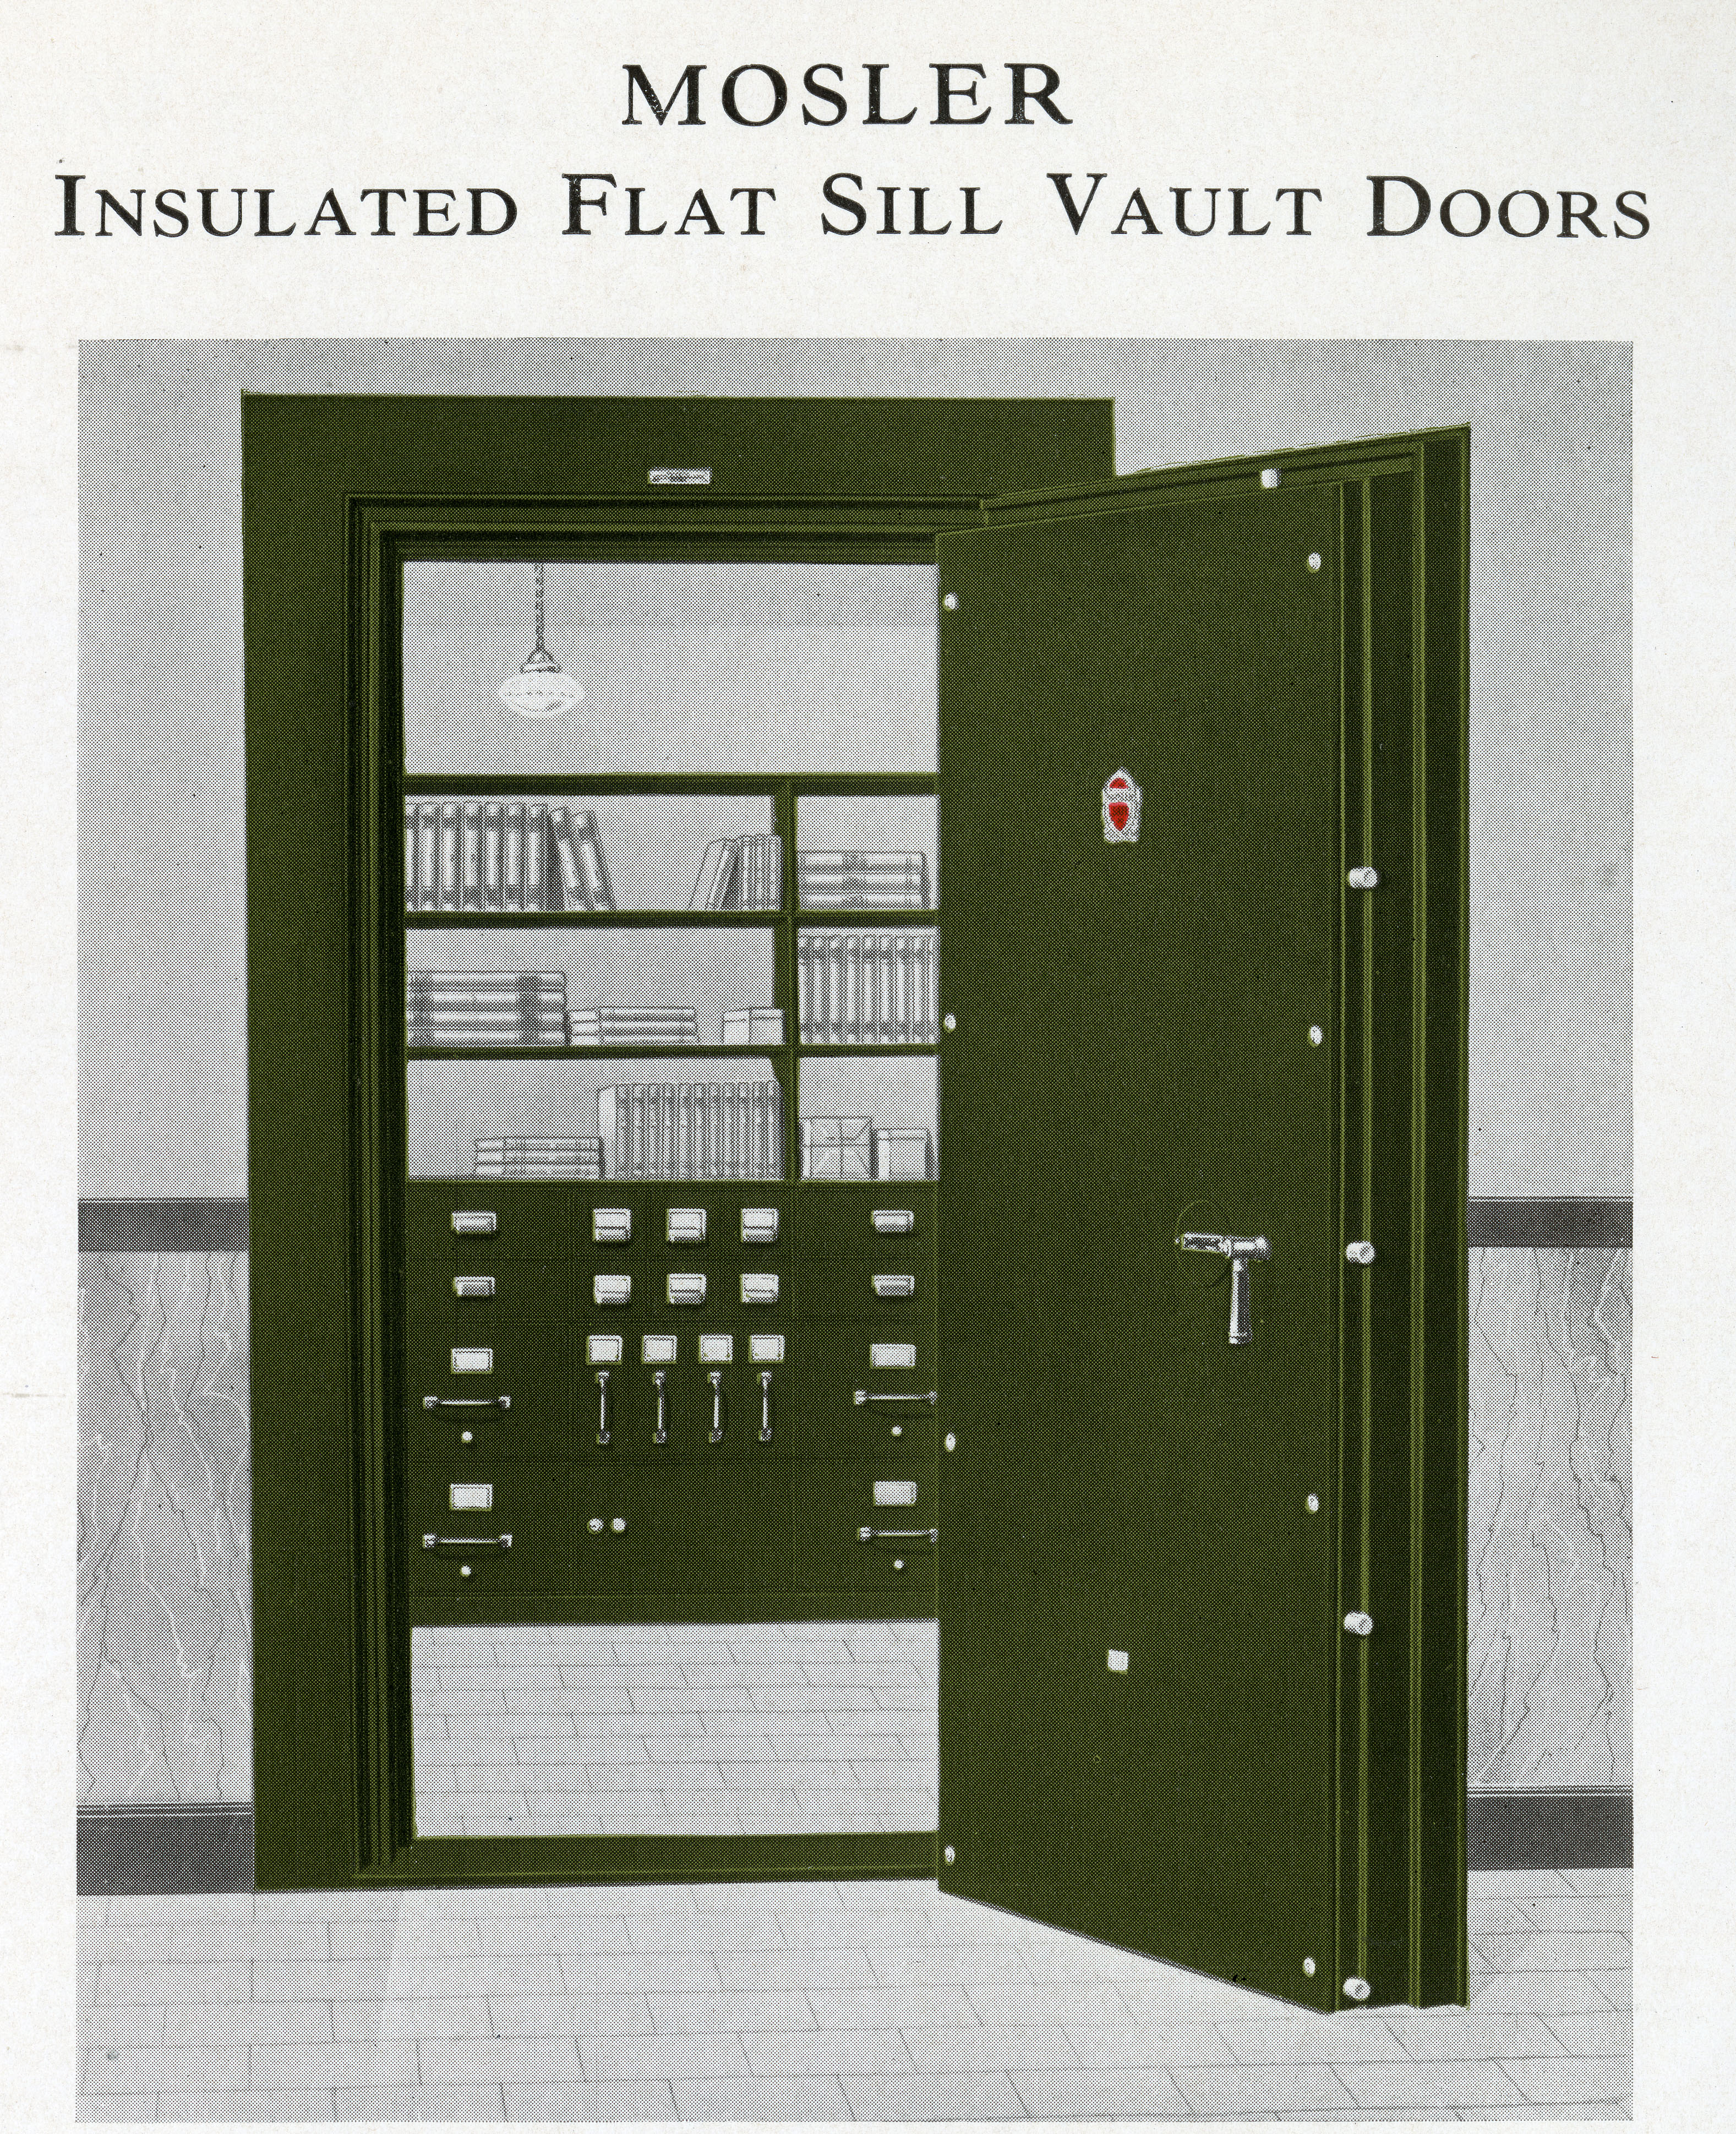 Mosler insulated flat sill vault doors, Mosler Safe Company Catalog, 1932.